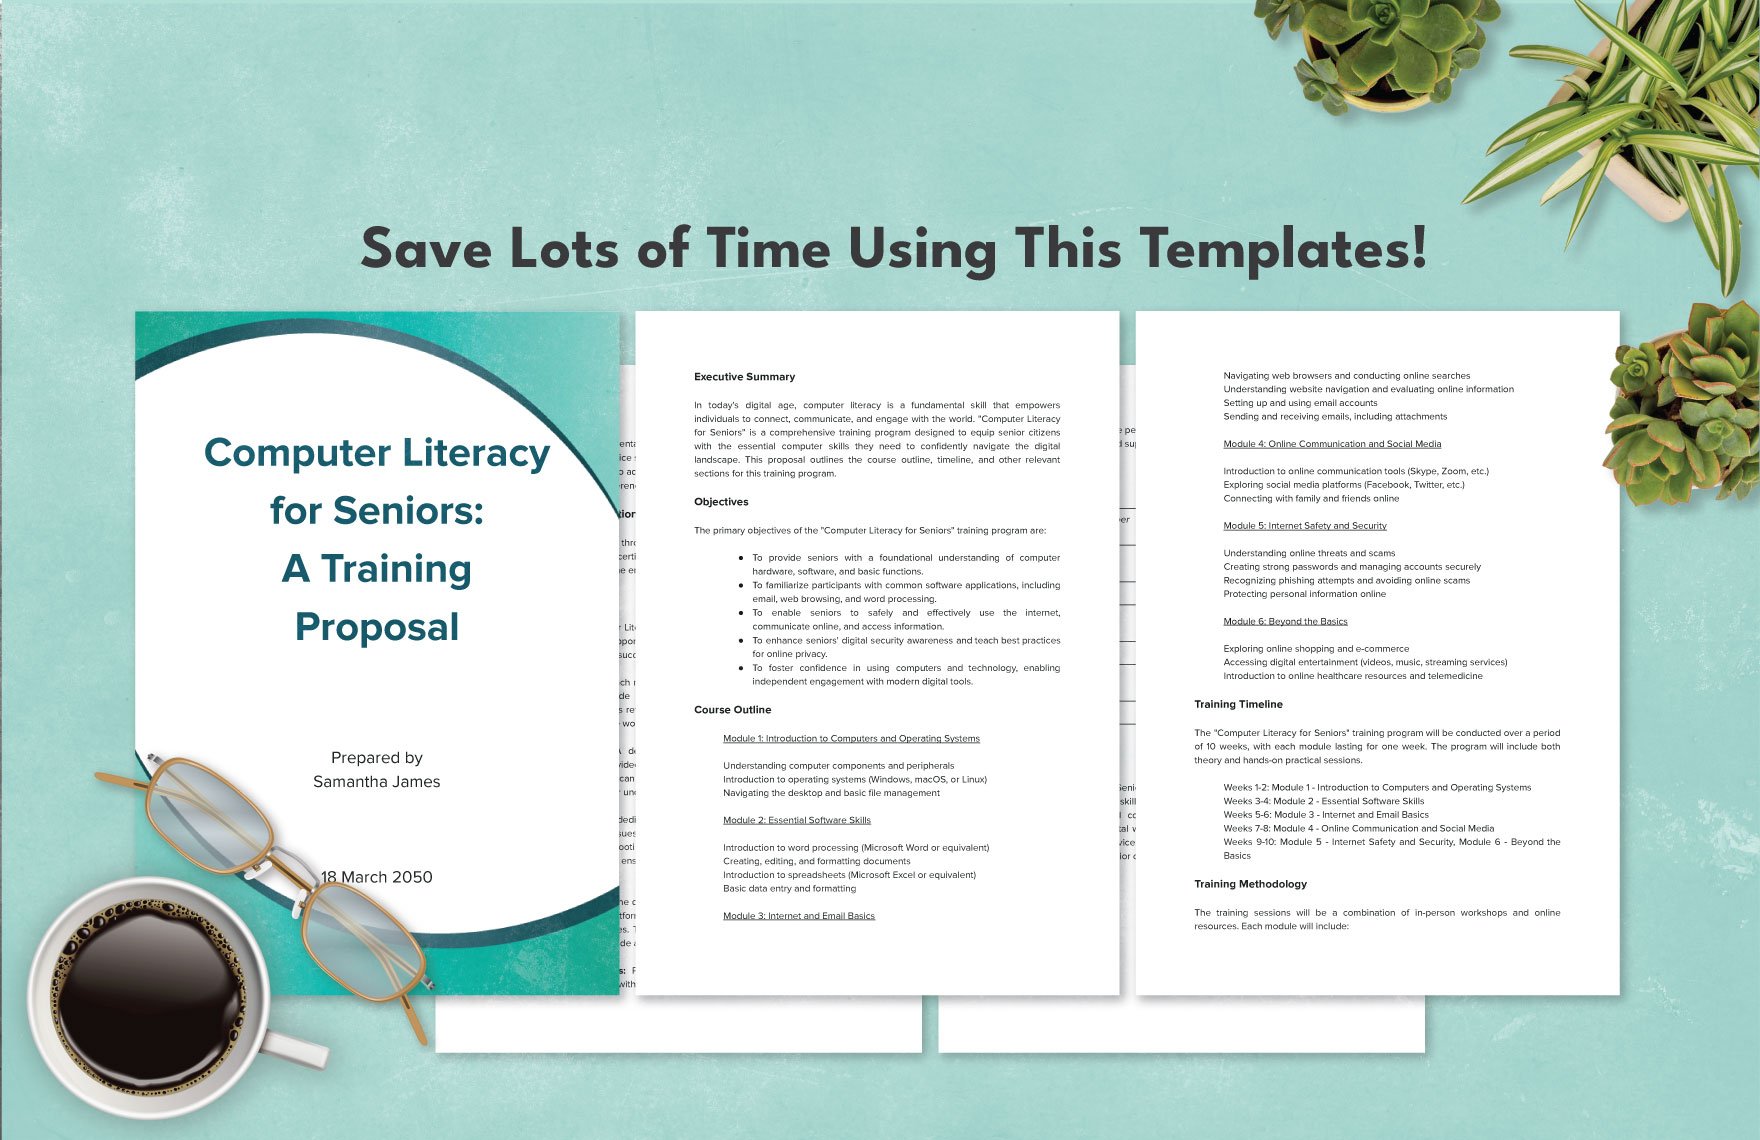 Computer Training Proposal Sample Template